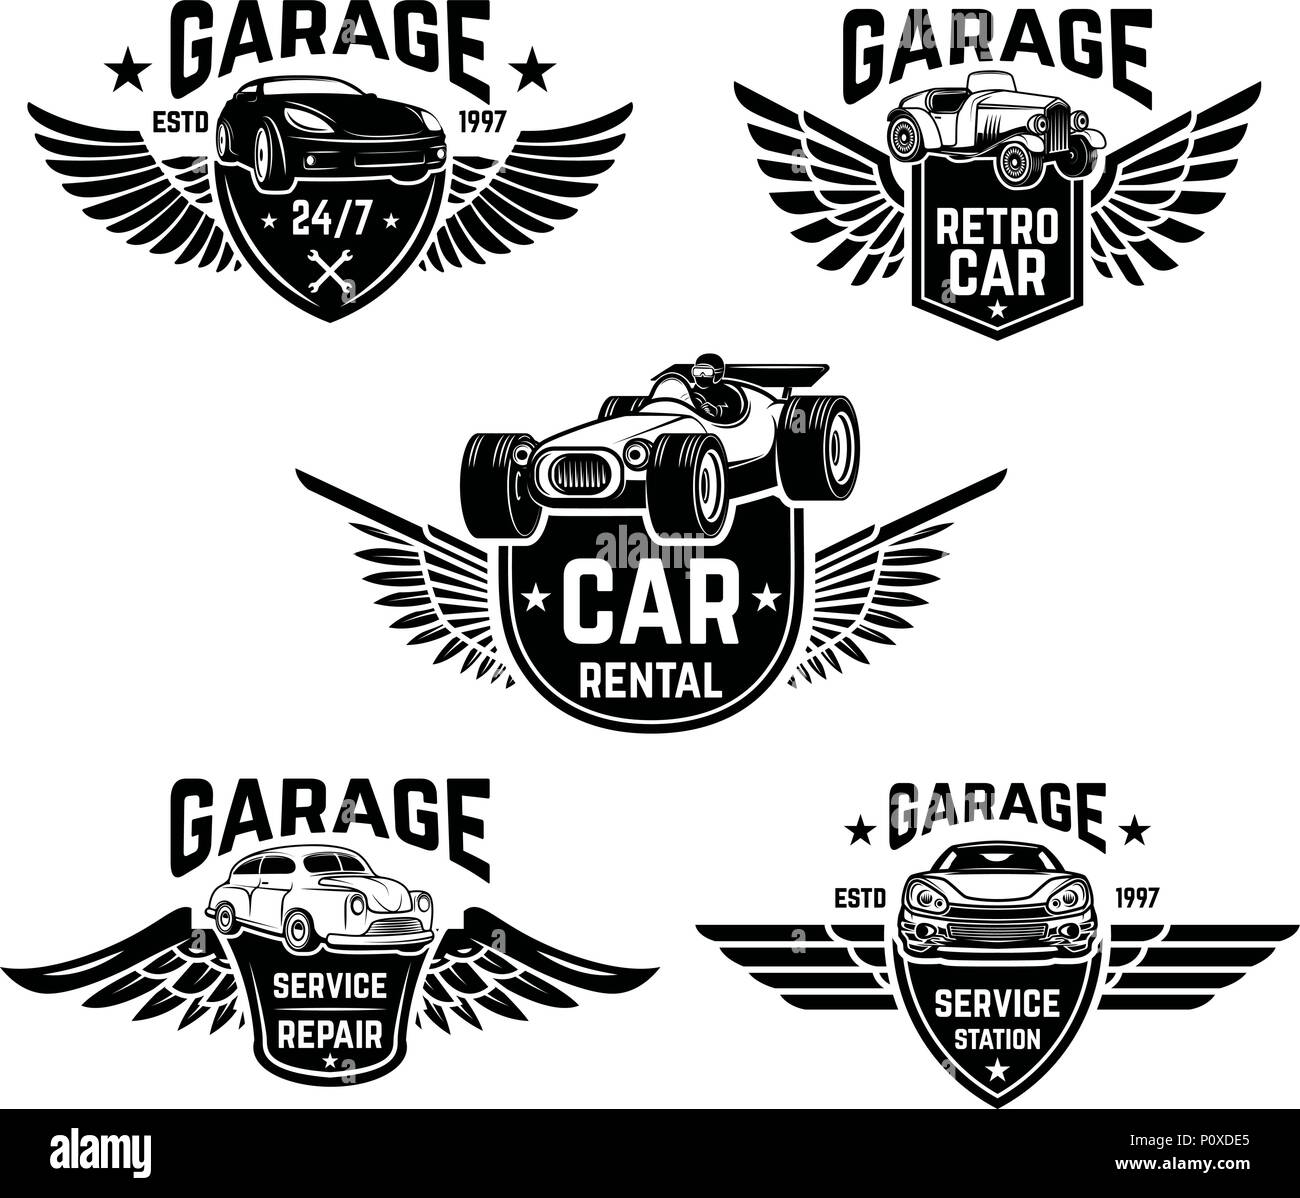 Mechanic Logo Kolbenschlüssel Gekreuzten Motor Auto Motorrad Biker Fahrrad  Garage Reparatur Service-Shop Stock-Vektorgrafik - Alamy